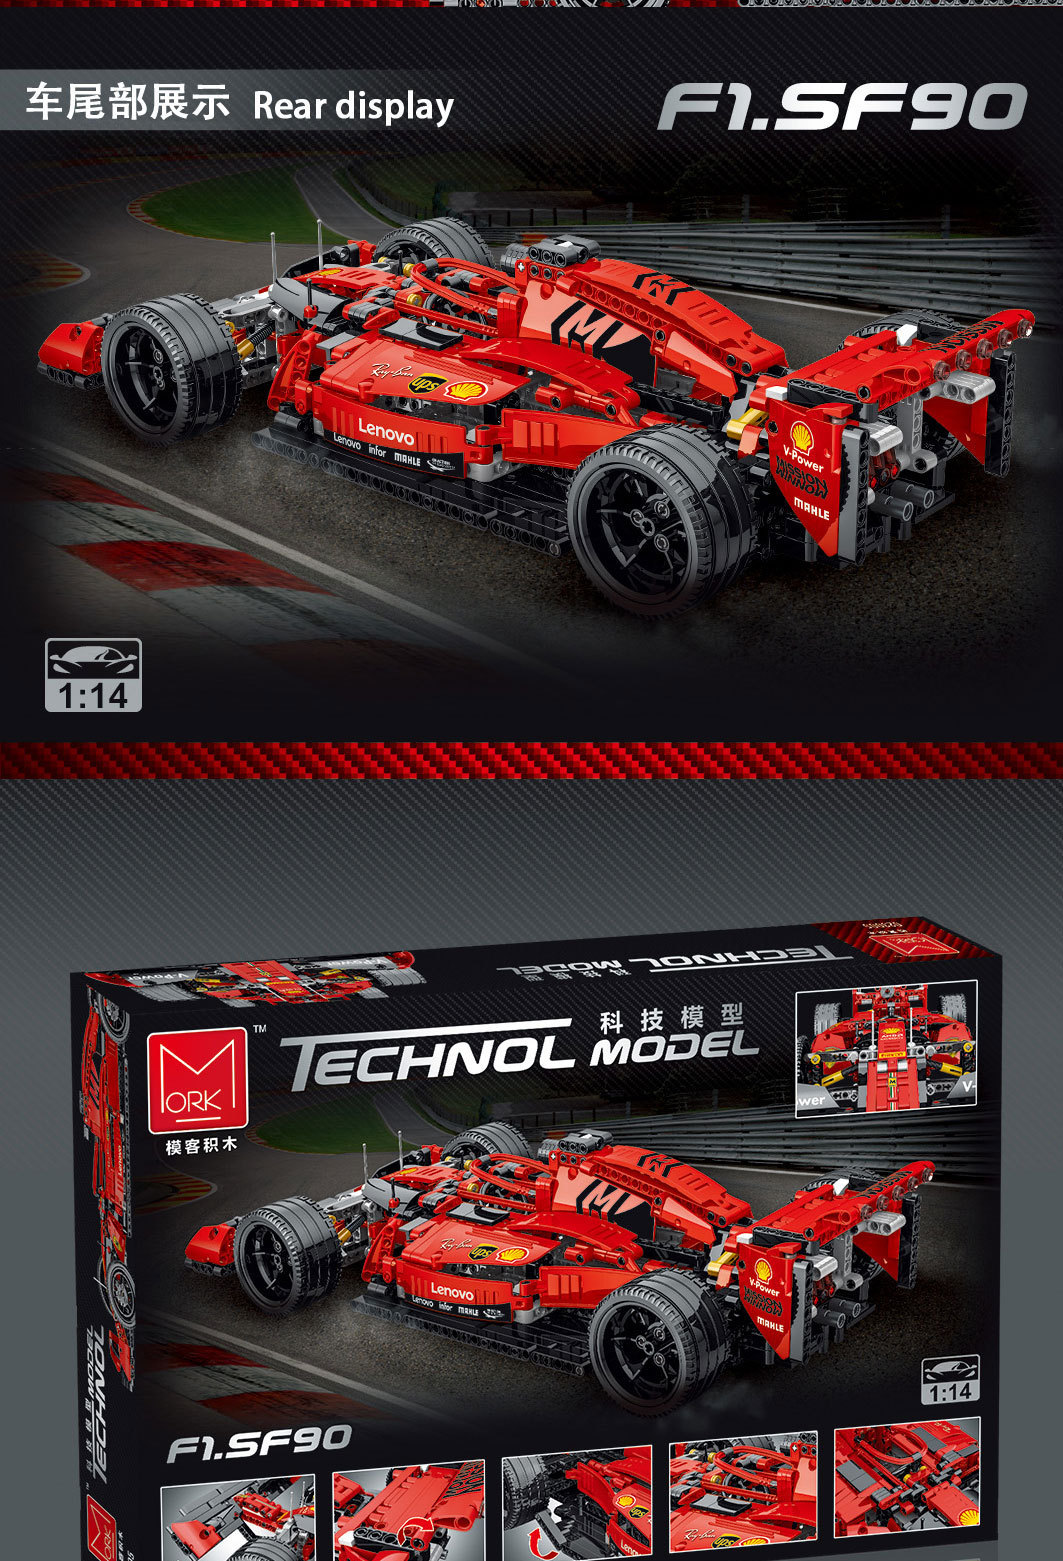 MORK 023005 Roter Ferrari SF90 Super-Rennwagen, Modellbaustein-Spielzeugset